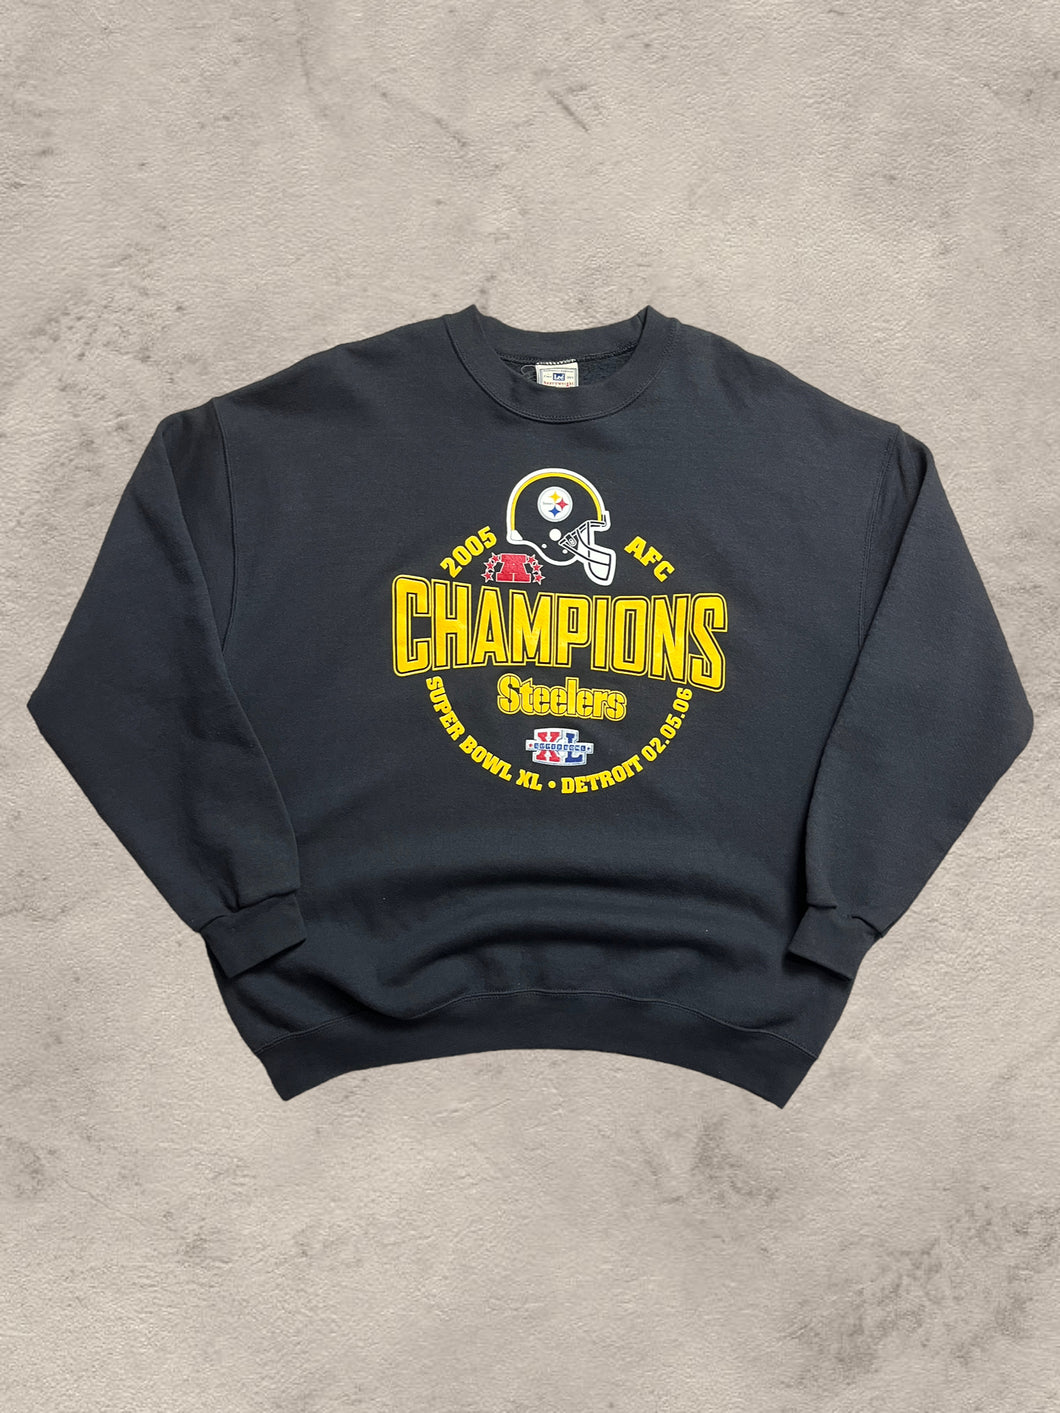 2005 Steelers Super Bowl Champions Sweatshirt - XL